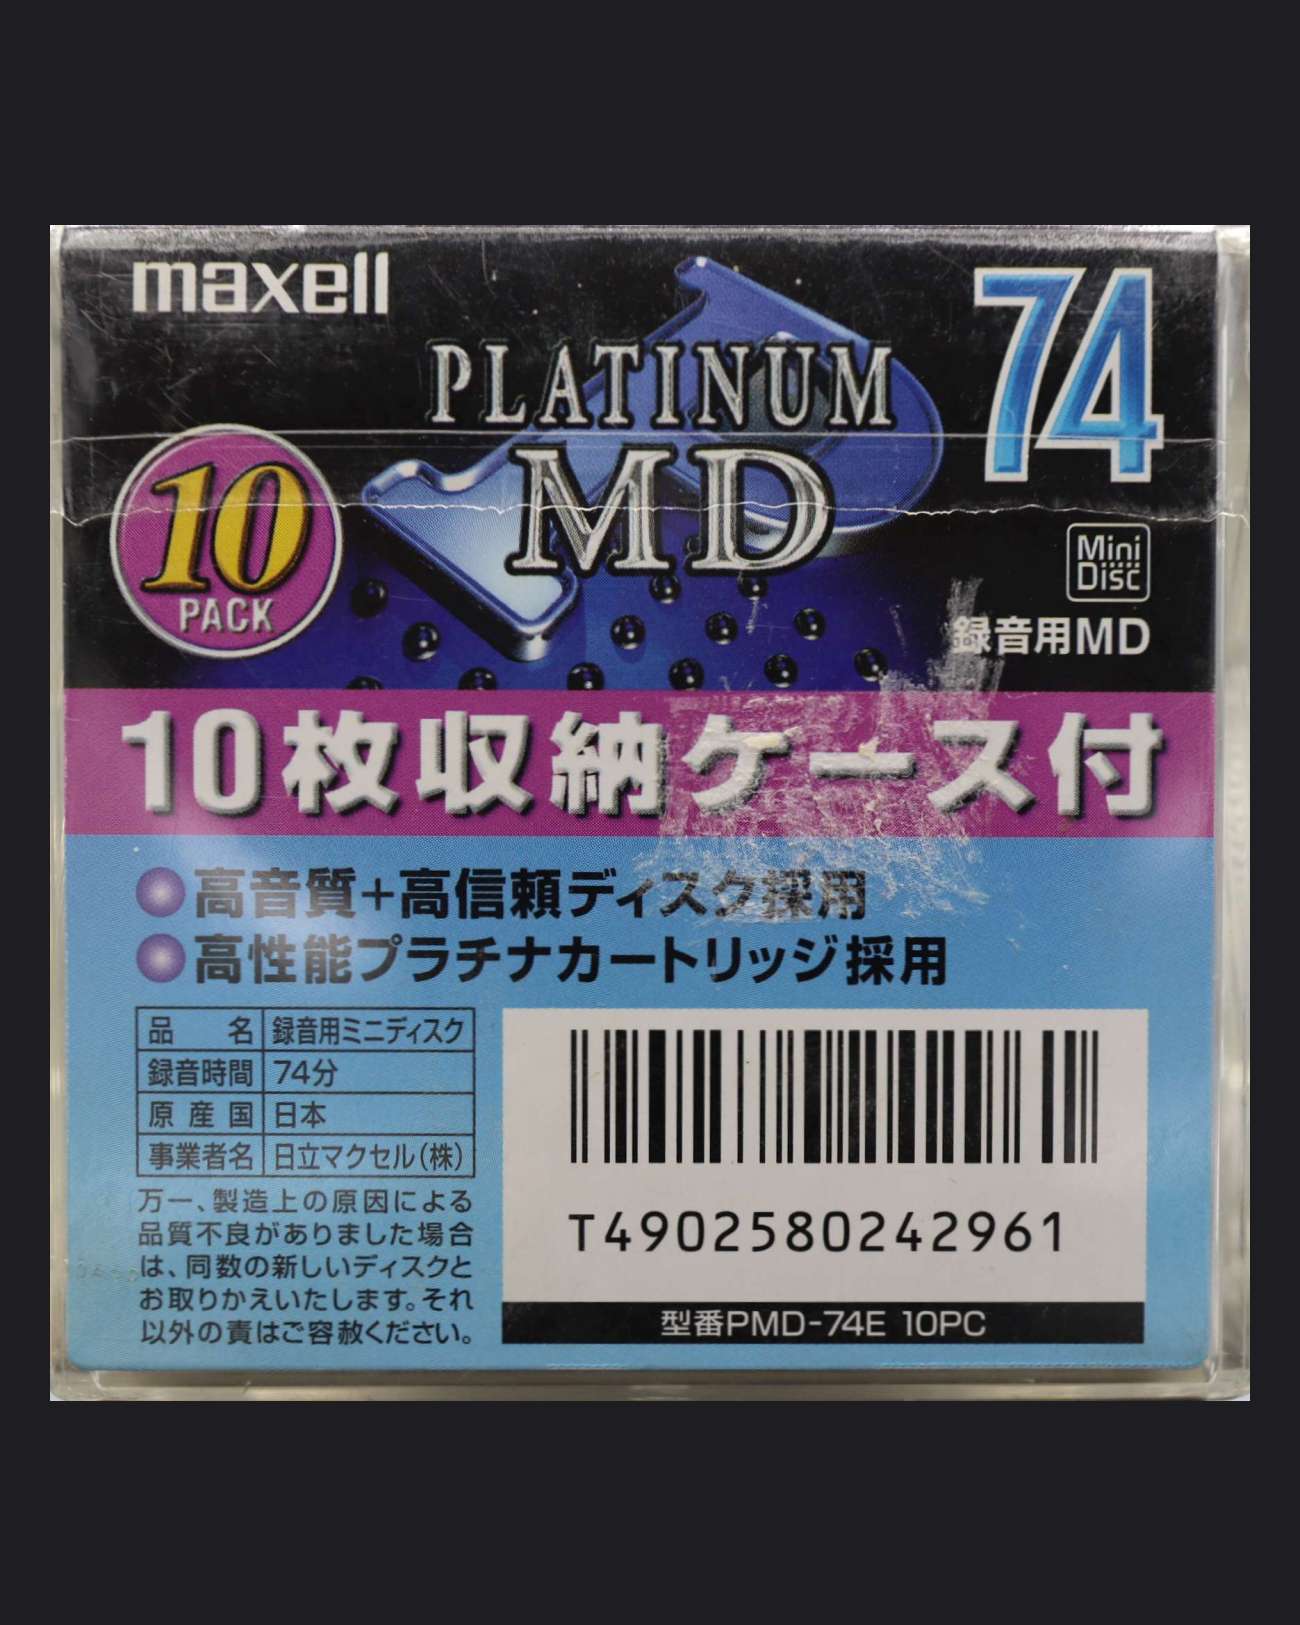 Maxell Platinum MD PMD